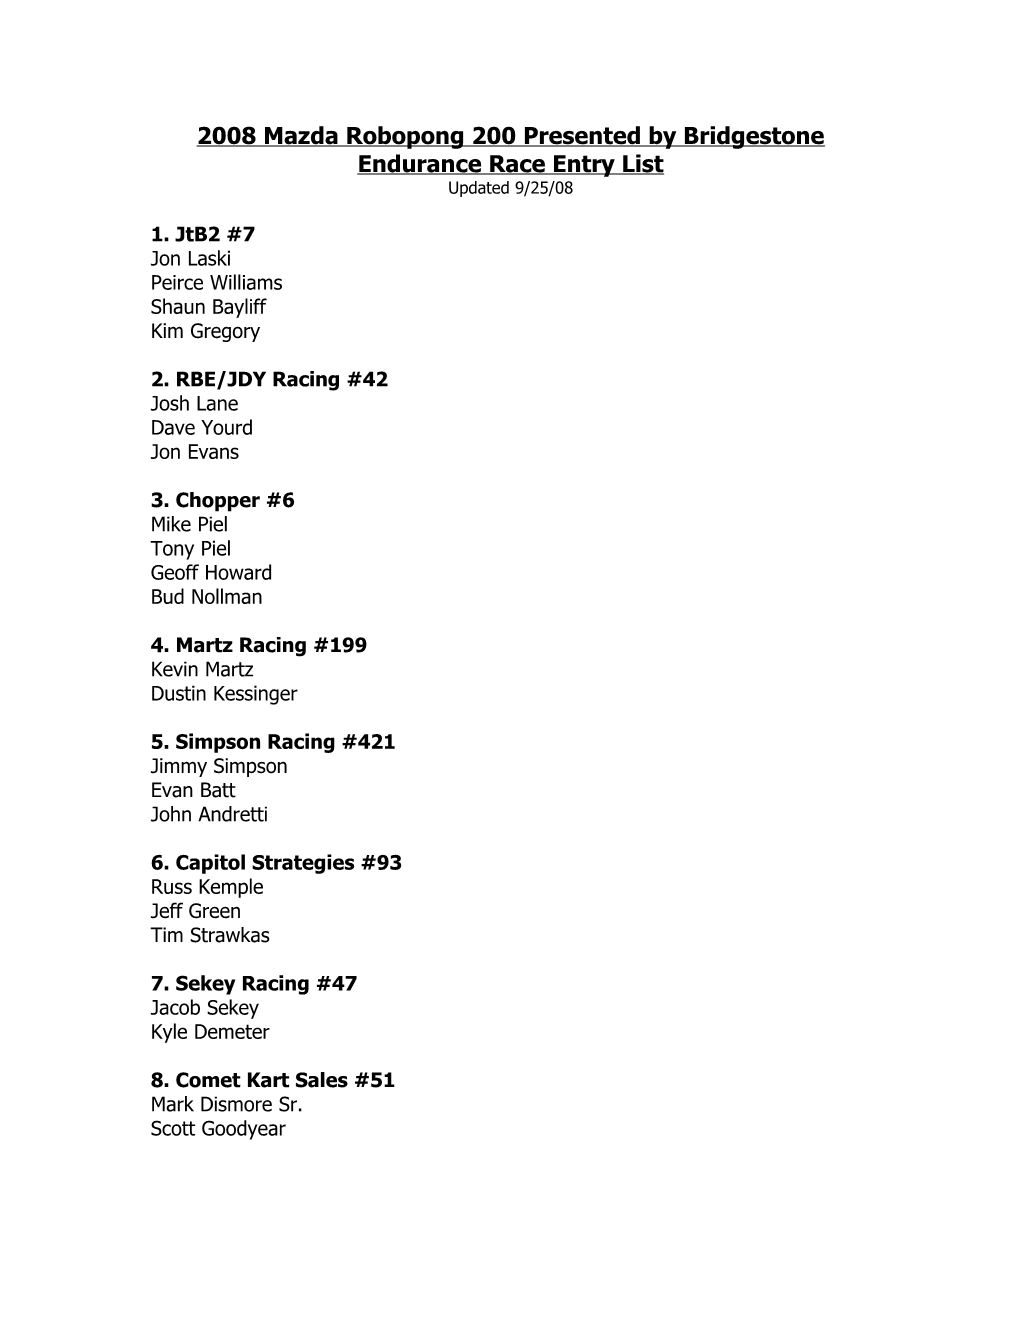 2008 Tag 200 Lap Endurance Race Entry List